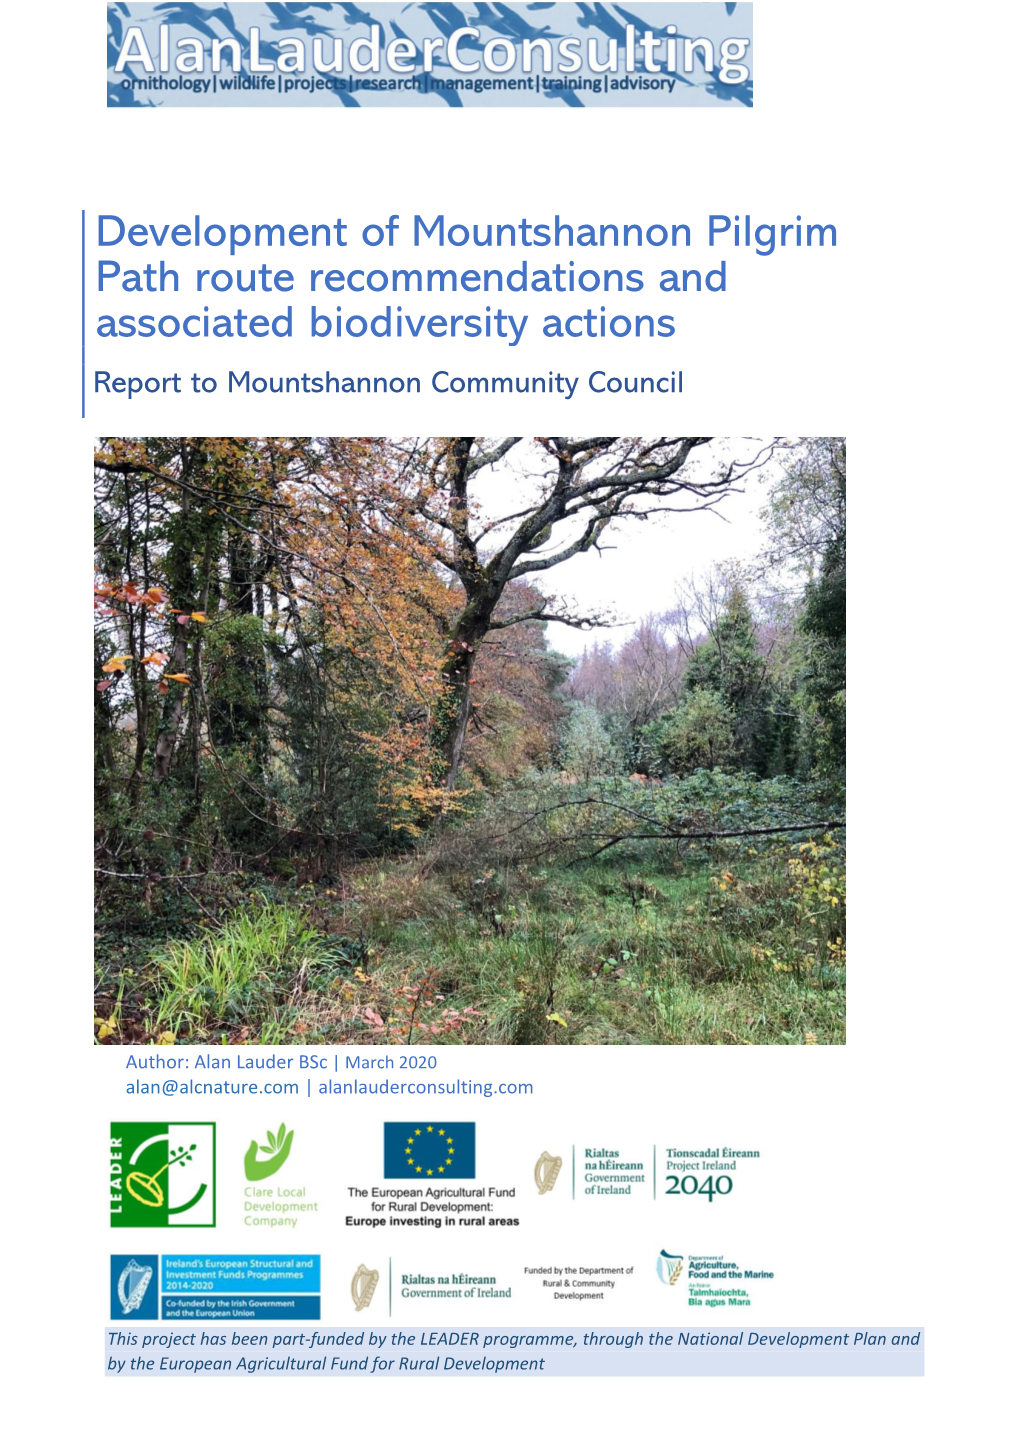 Development of Mountshannon Pilgrim Path Route Recommendations and Associated Biodiversity Actions